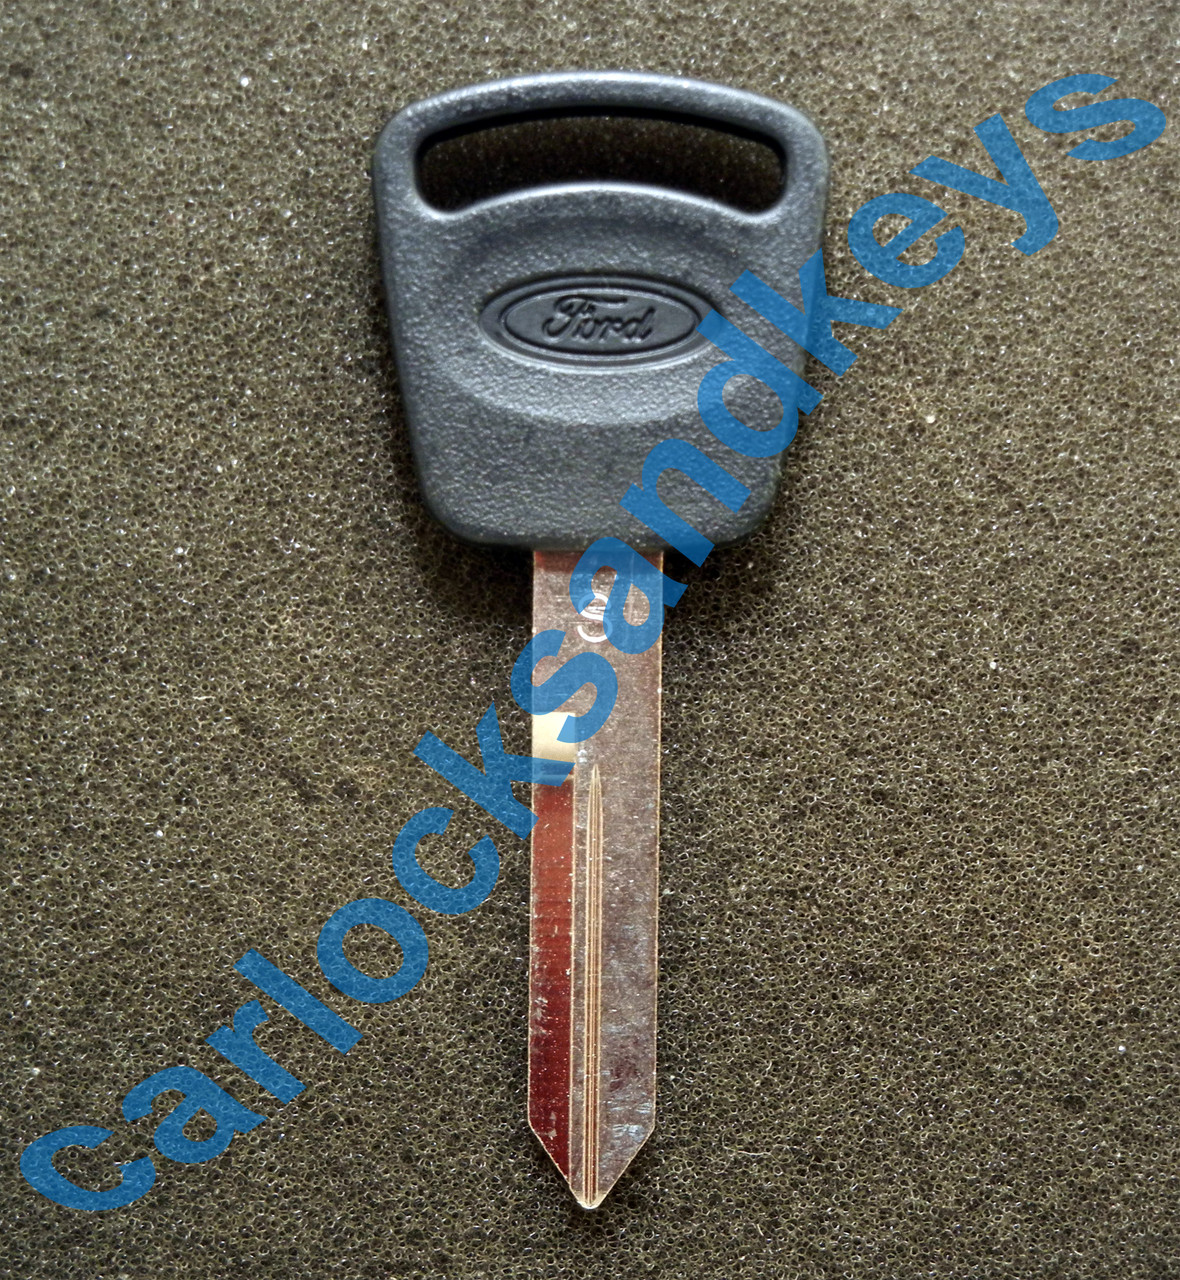 2010-2011 Ford Explorer Sport Trac OEM Key Blank - Car Locks and Keys